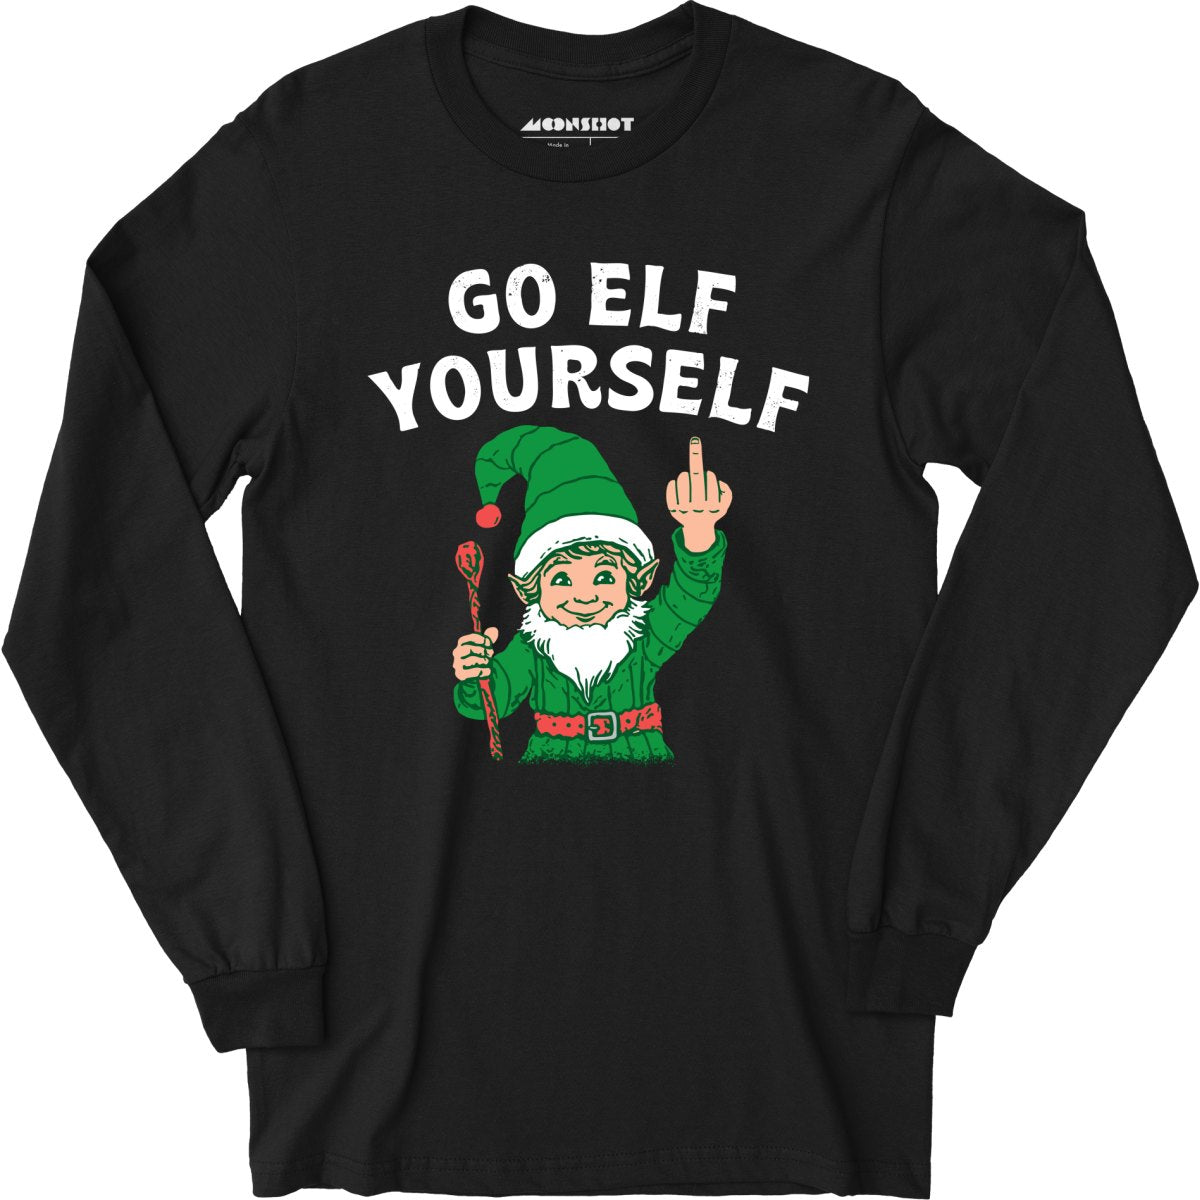 Go Elf Yourself - Long Sleeve T-Shirt